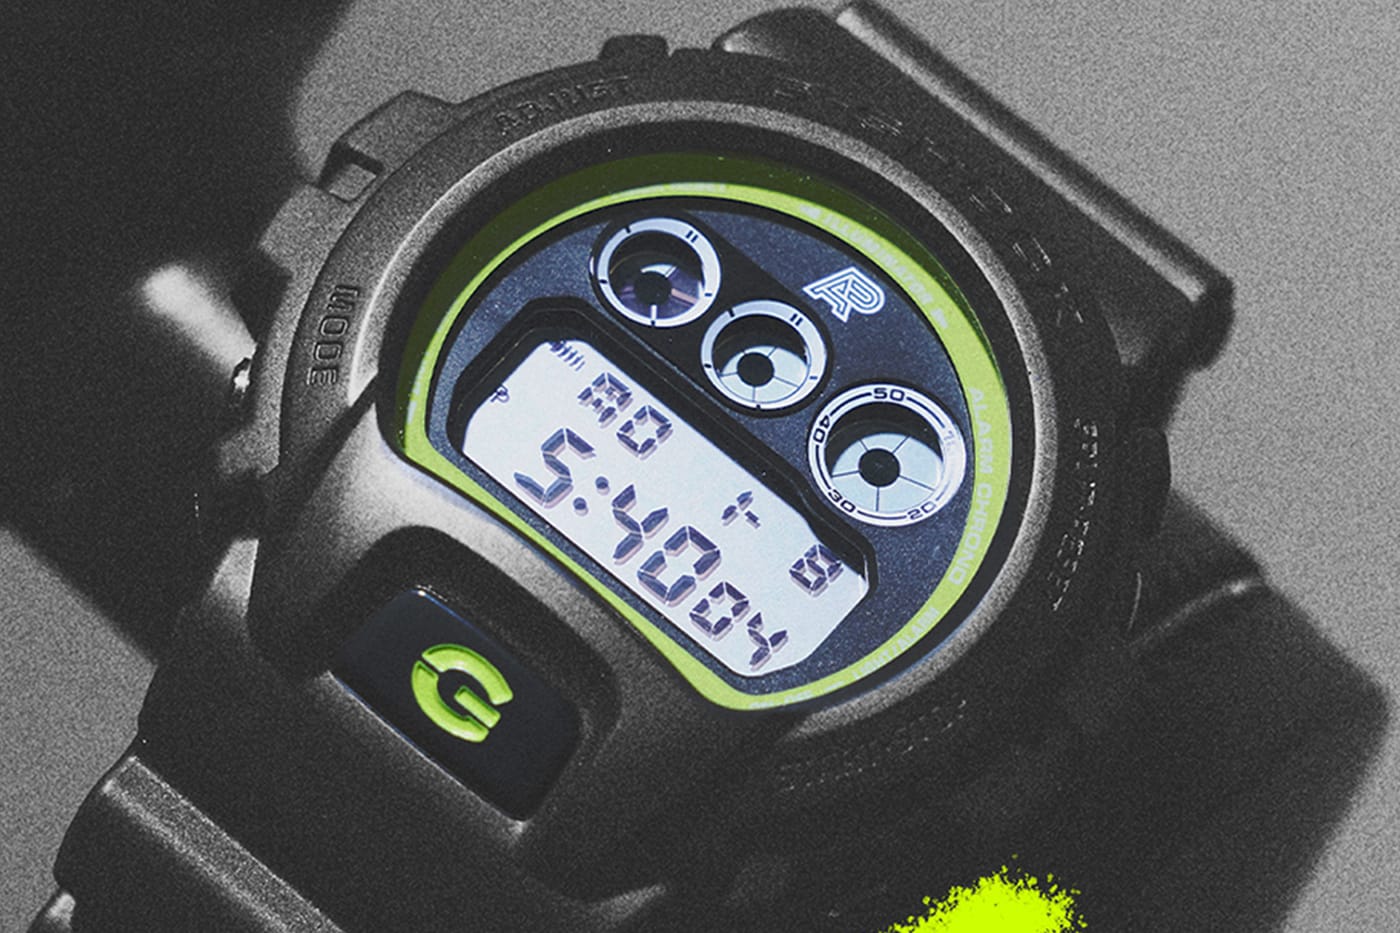 PORTER x G-SHOCK DW 6900 Watch | Hypebeast